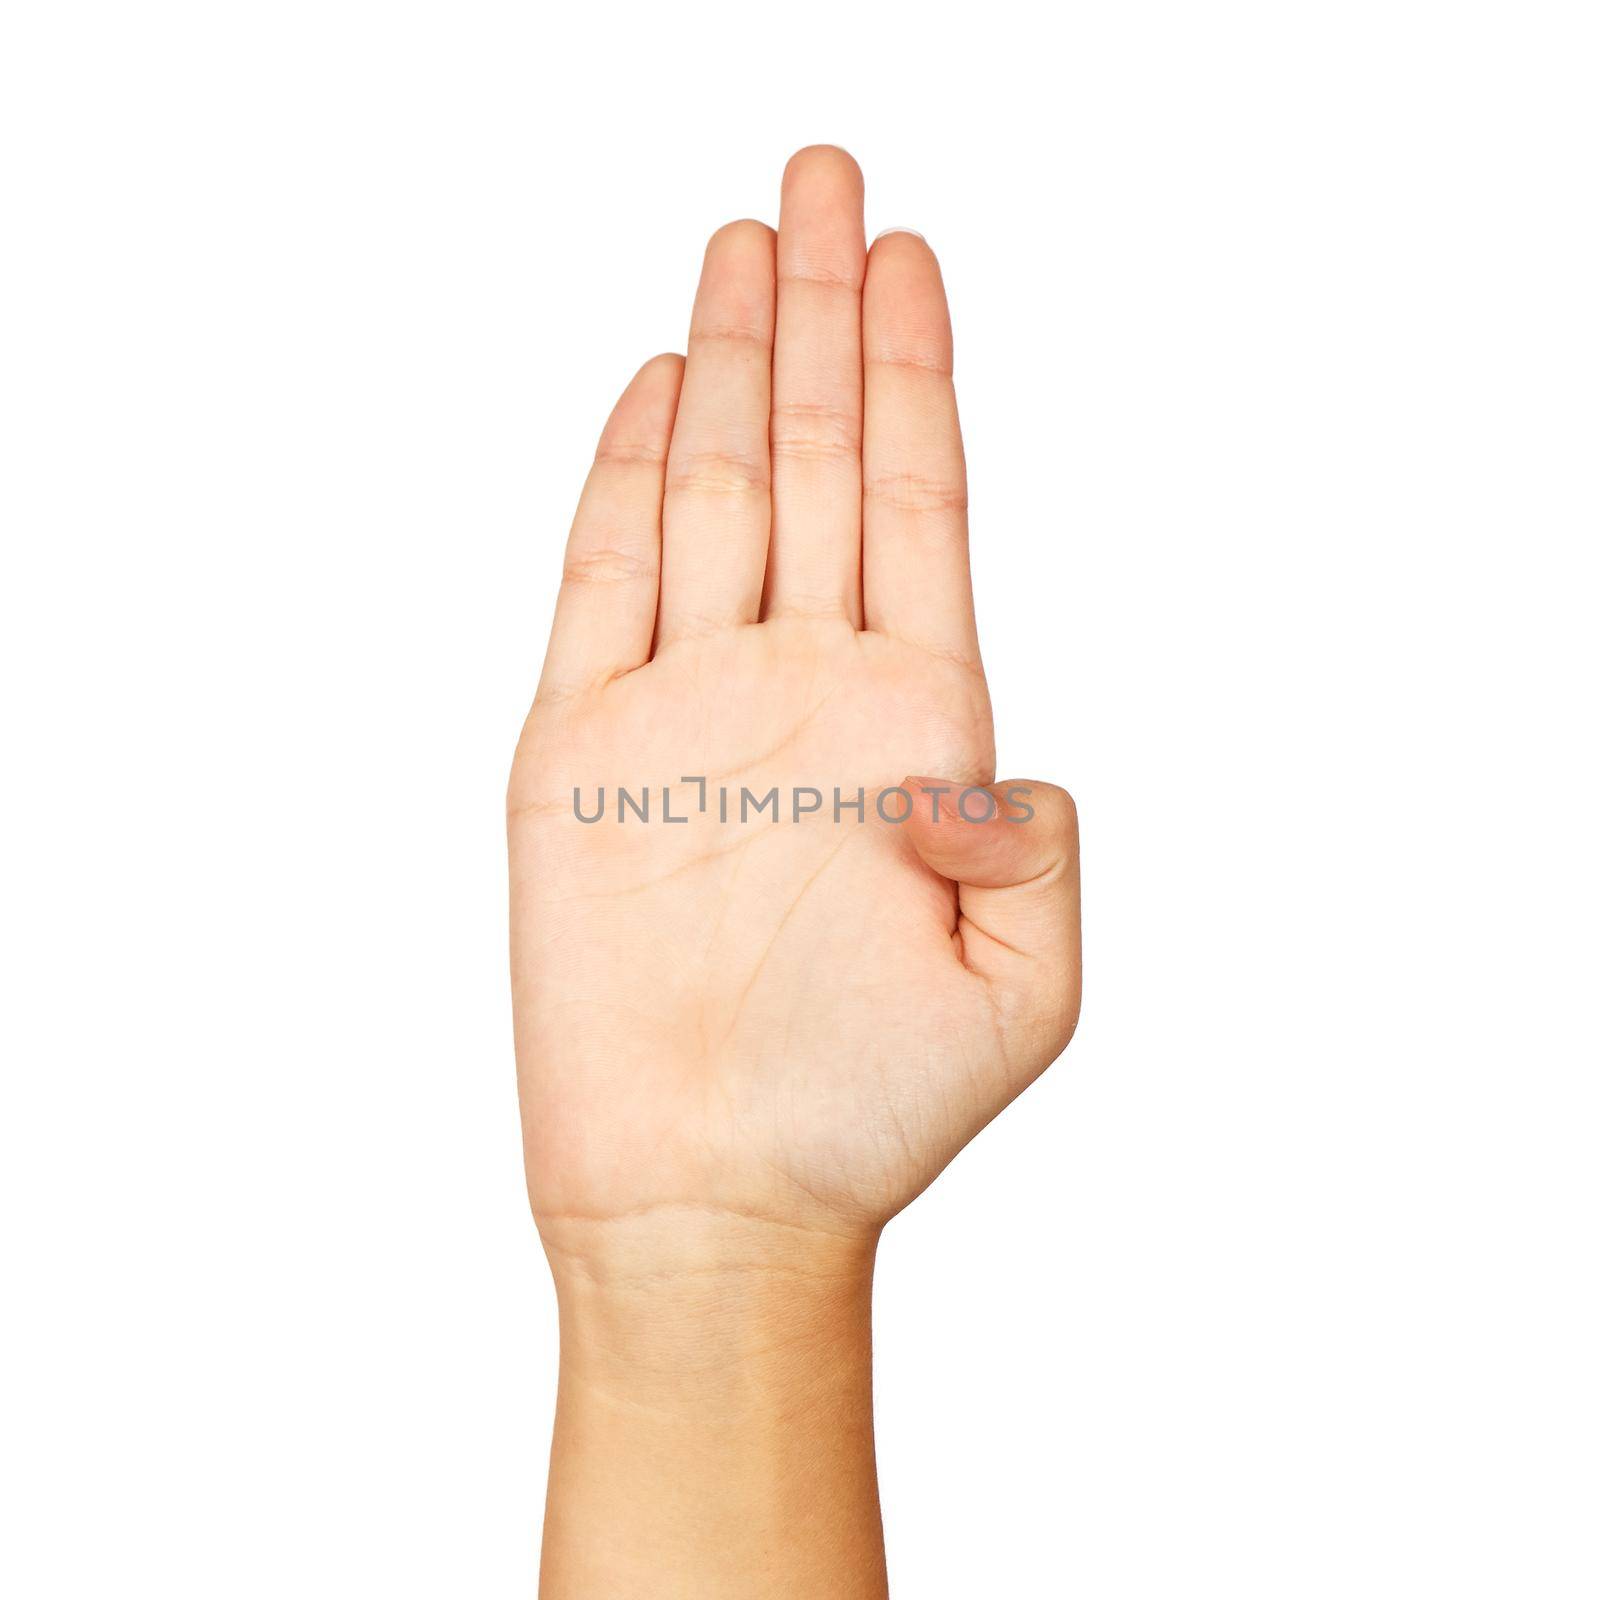 american sign language. female hand showing letter b by raddnatt